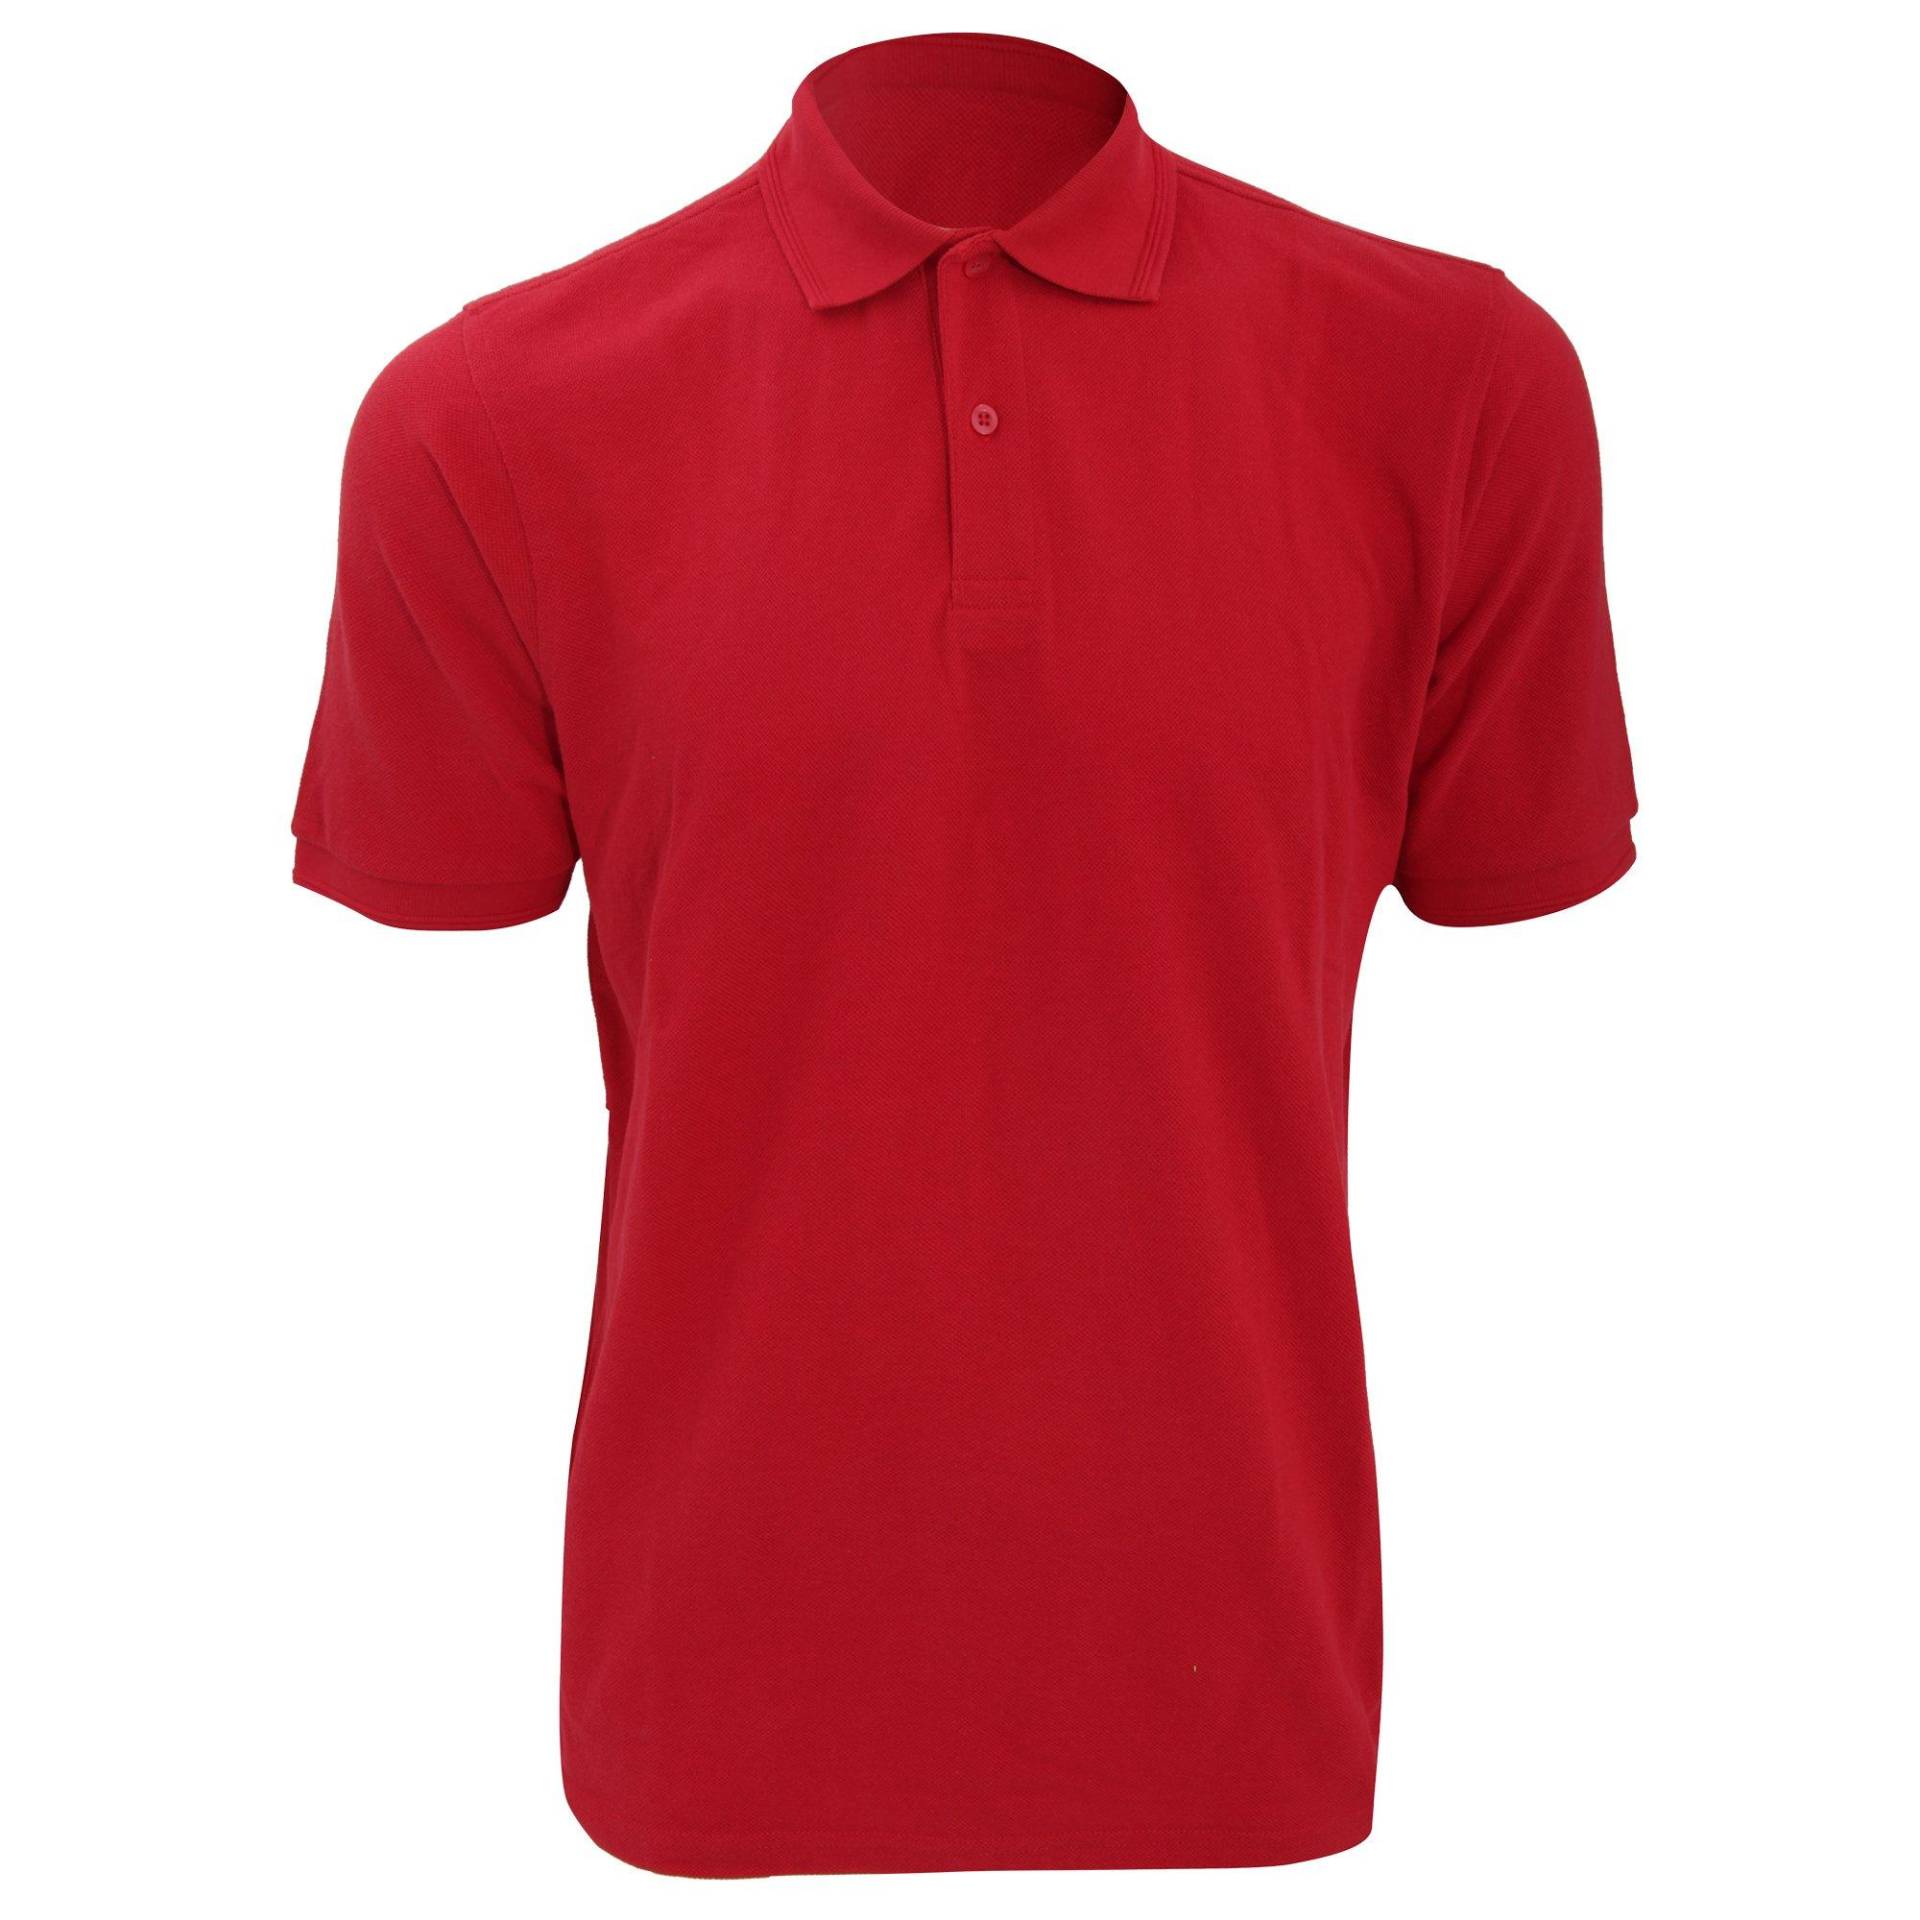 Ripple Collar & Cuff Kurzarm Polo Shirt Herren Rot Bunt M von Russell